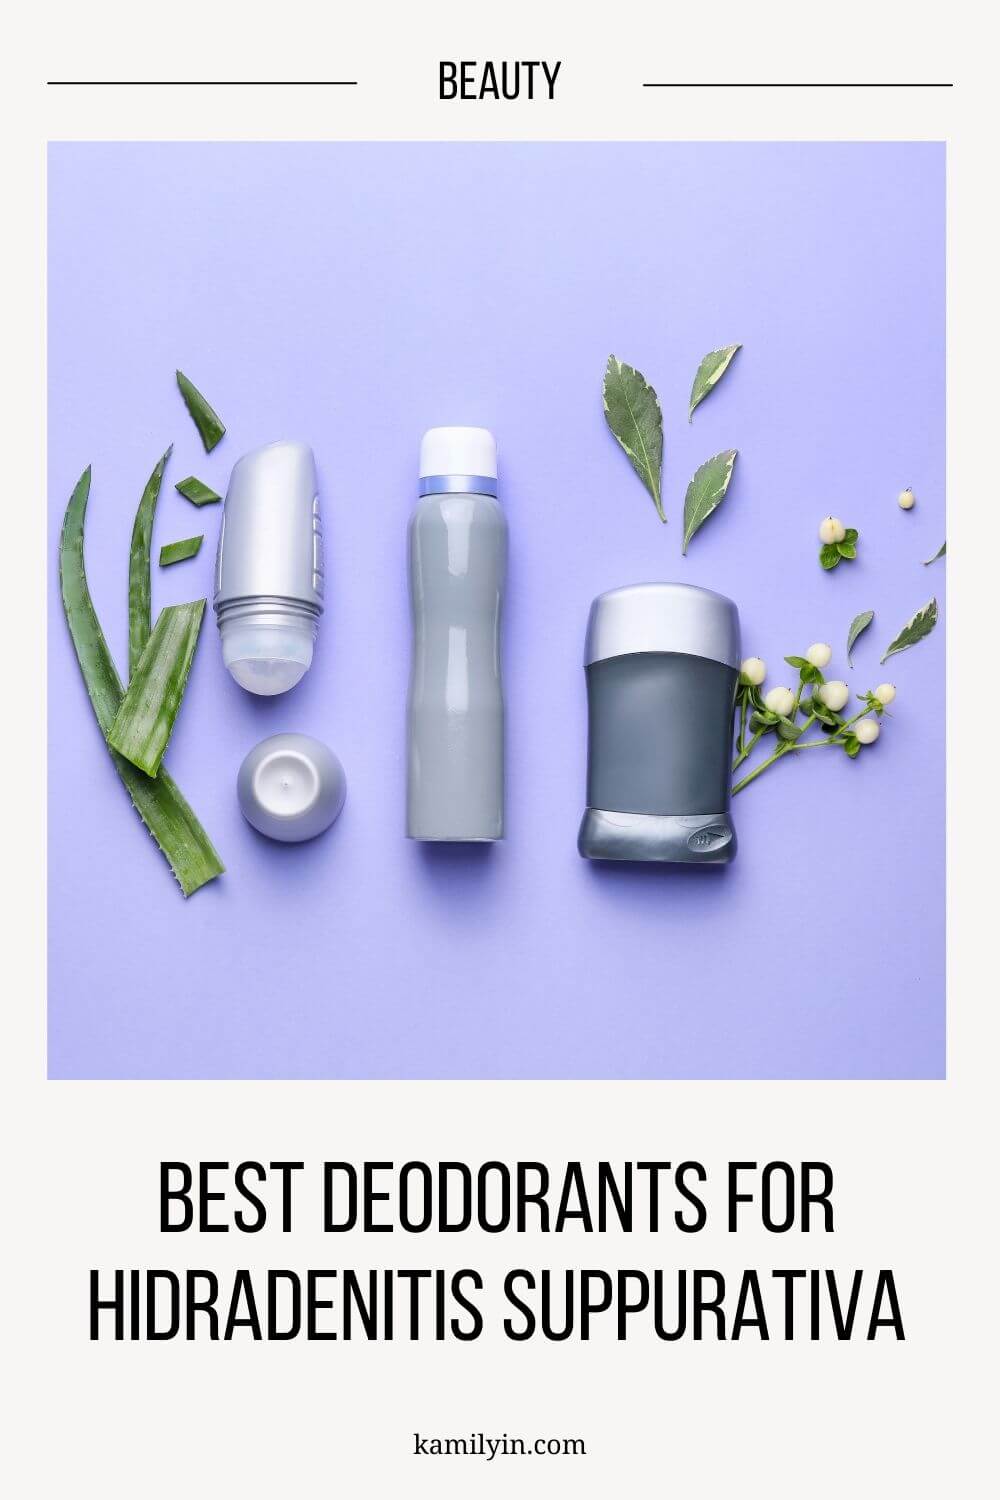 Best Deodorants for Hidradenitis Suppurativa